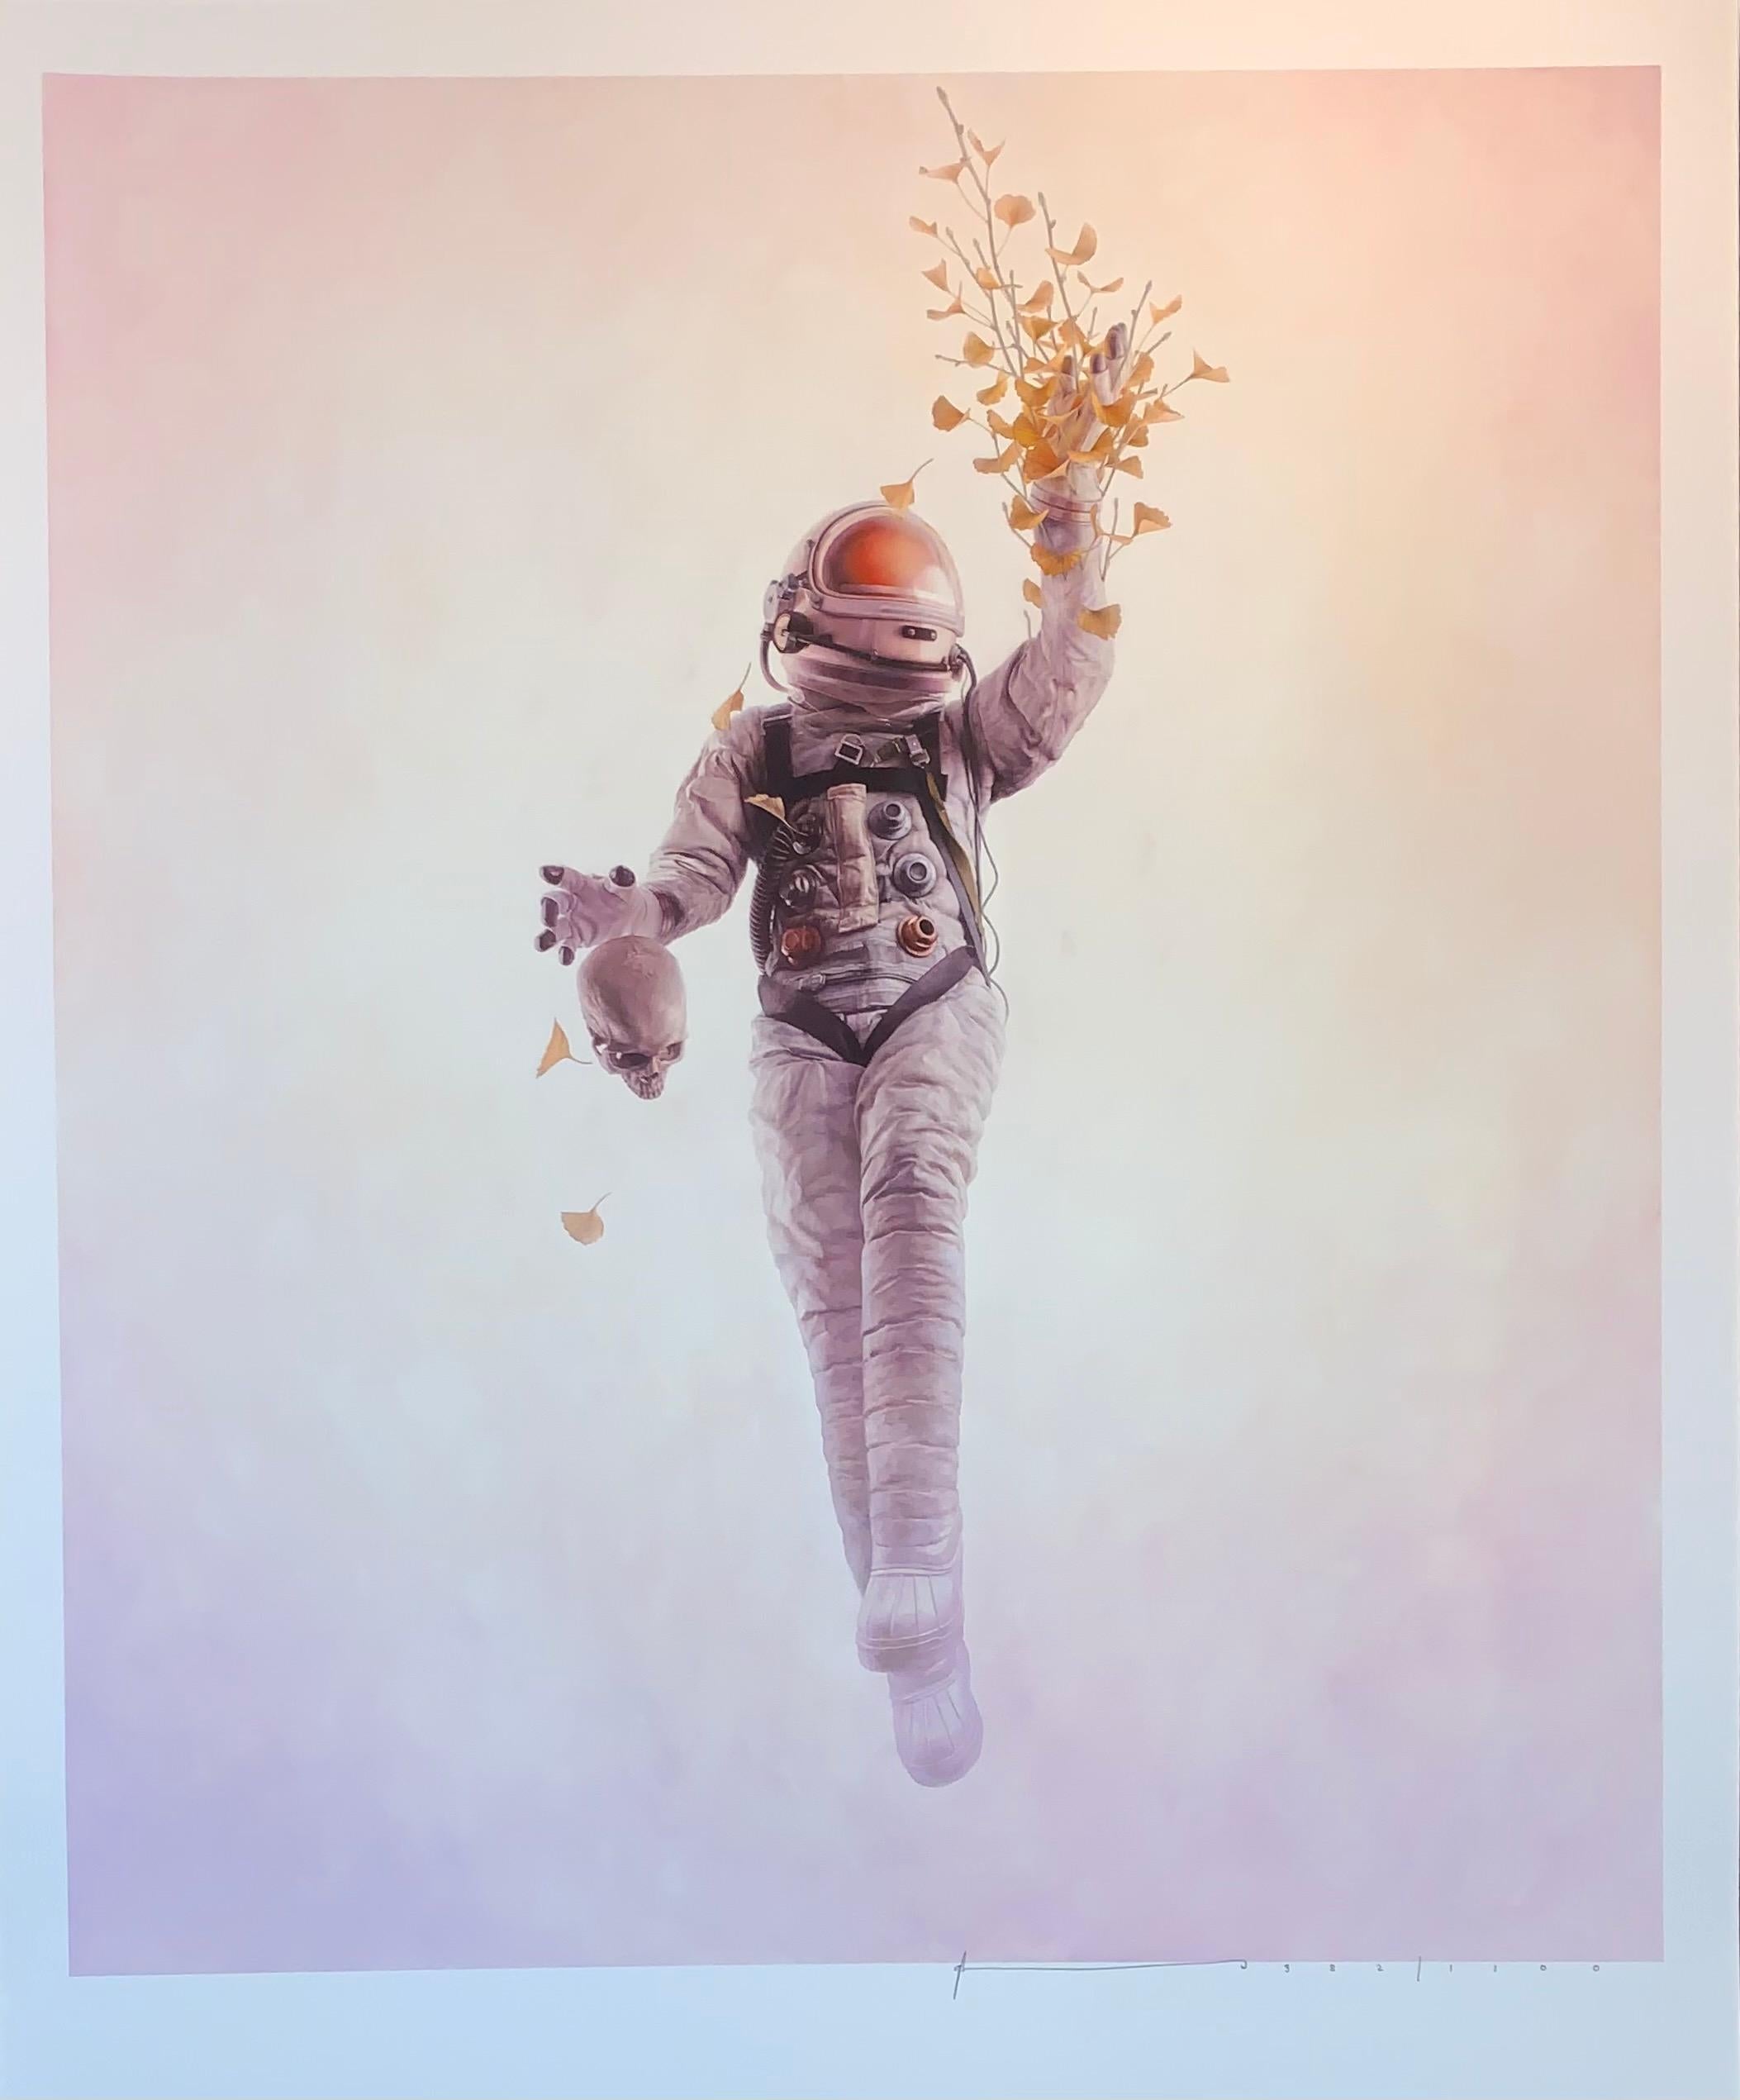 Jeremy Geddes "Foundation" Astronaut Print 2015 Australia Surrealist Art  